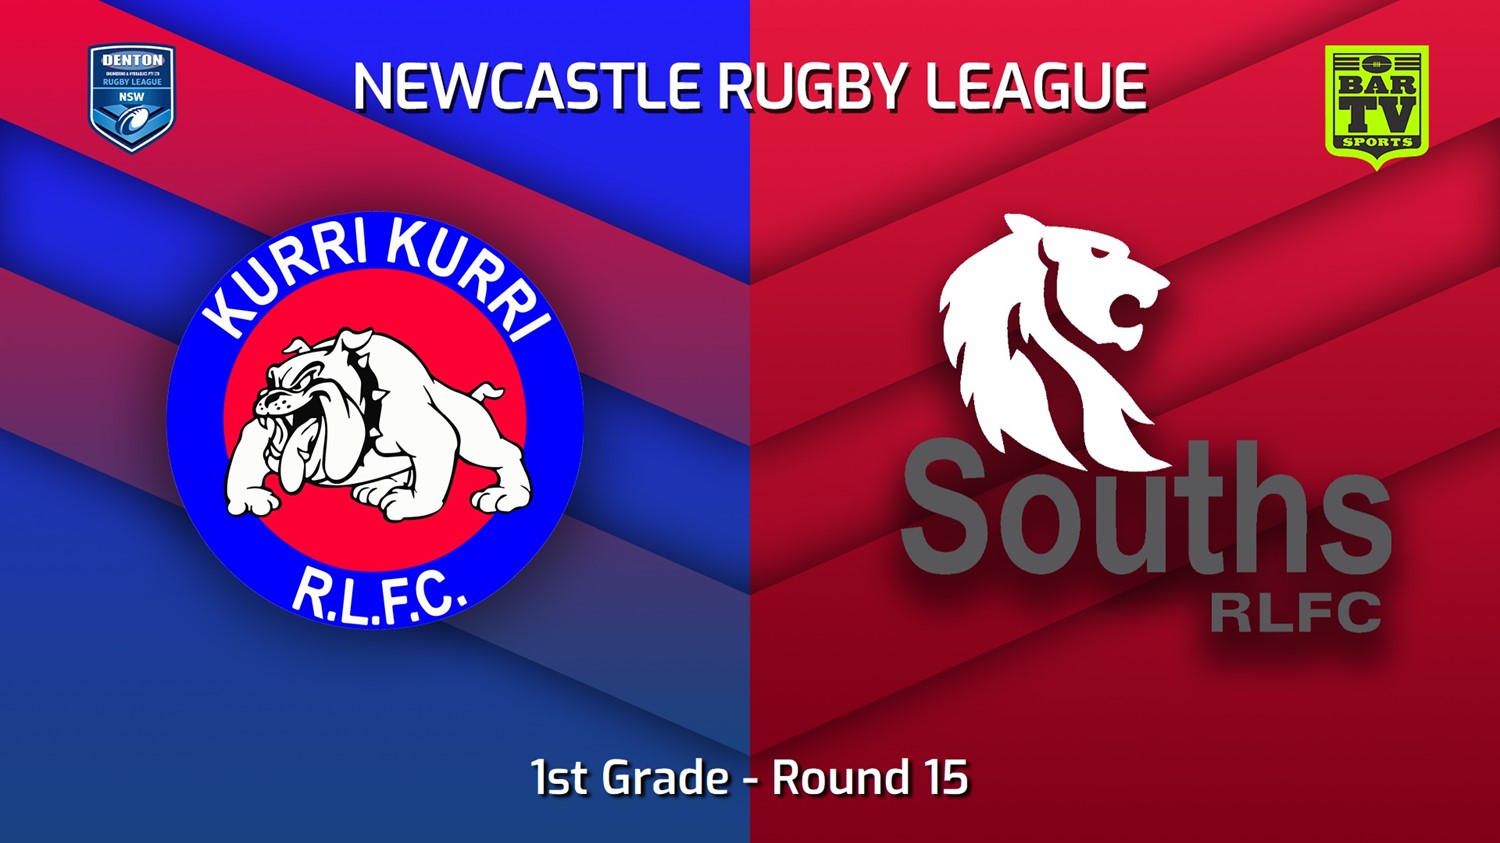 220813-Newcastle Round 15 - 1st Grade - Kurri Kurri Bulldogs v South Newcastle Lions Slate Image